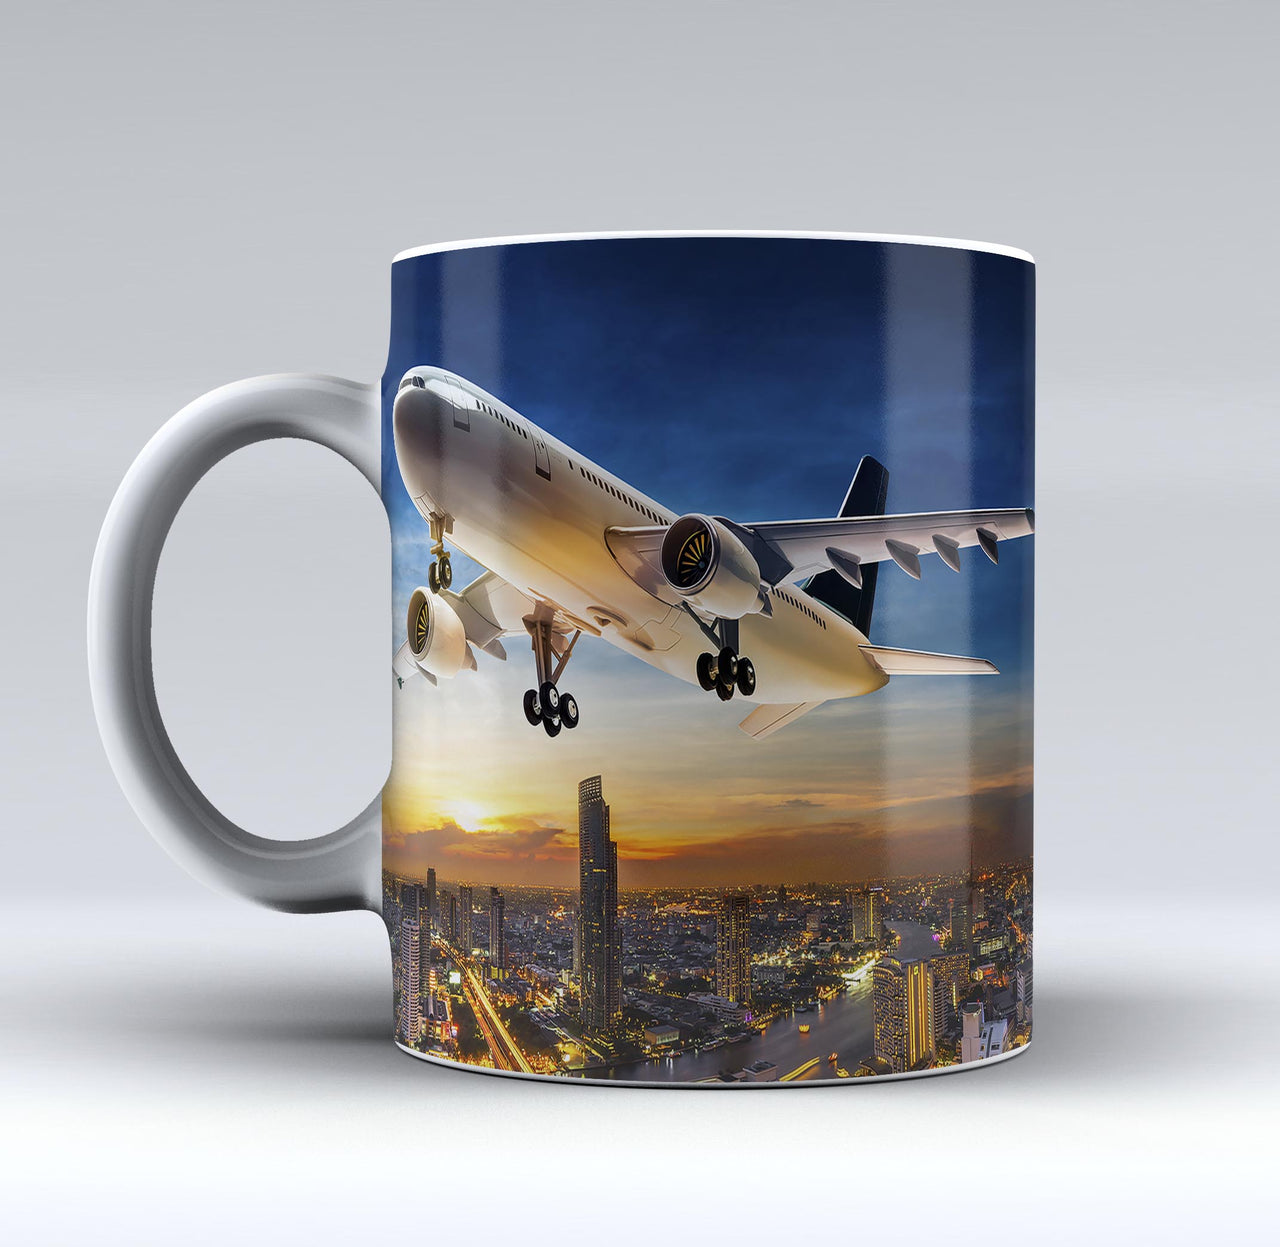 Super Aircraft over City at Sunset Designed Mugs